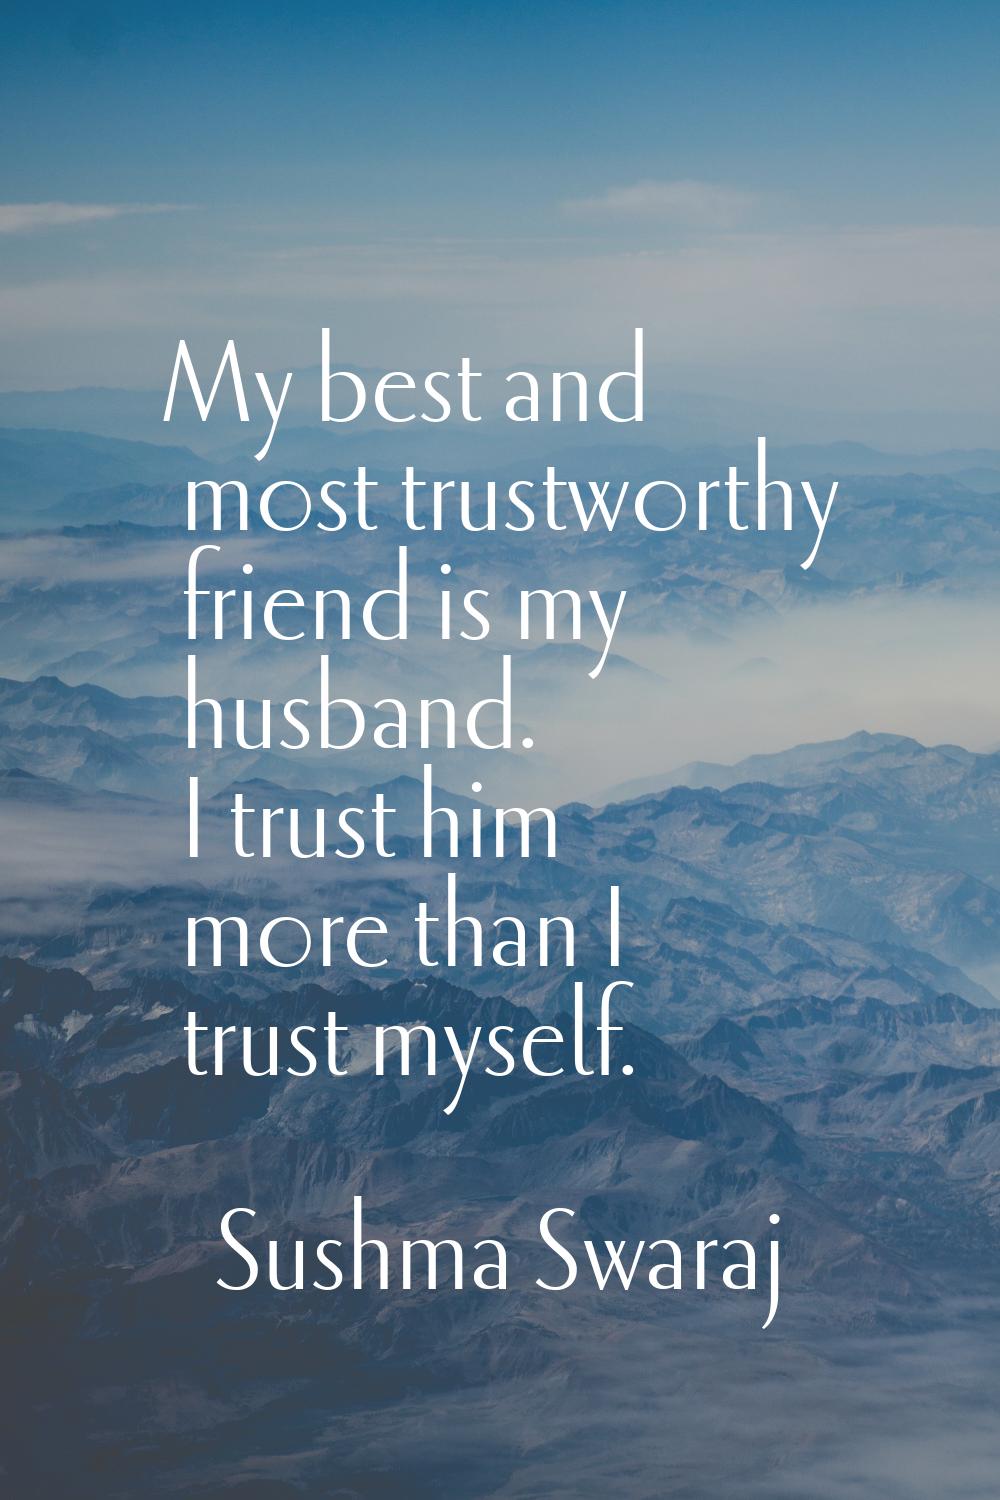 My best and most trustworthy friend is my husband. I trust him more than I trust myself.